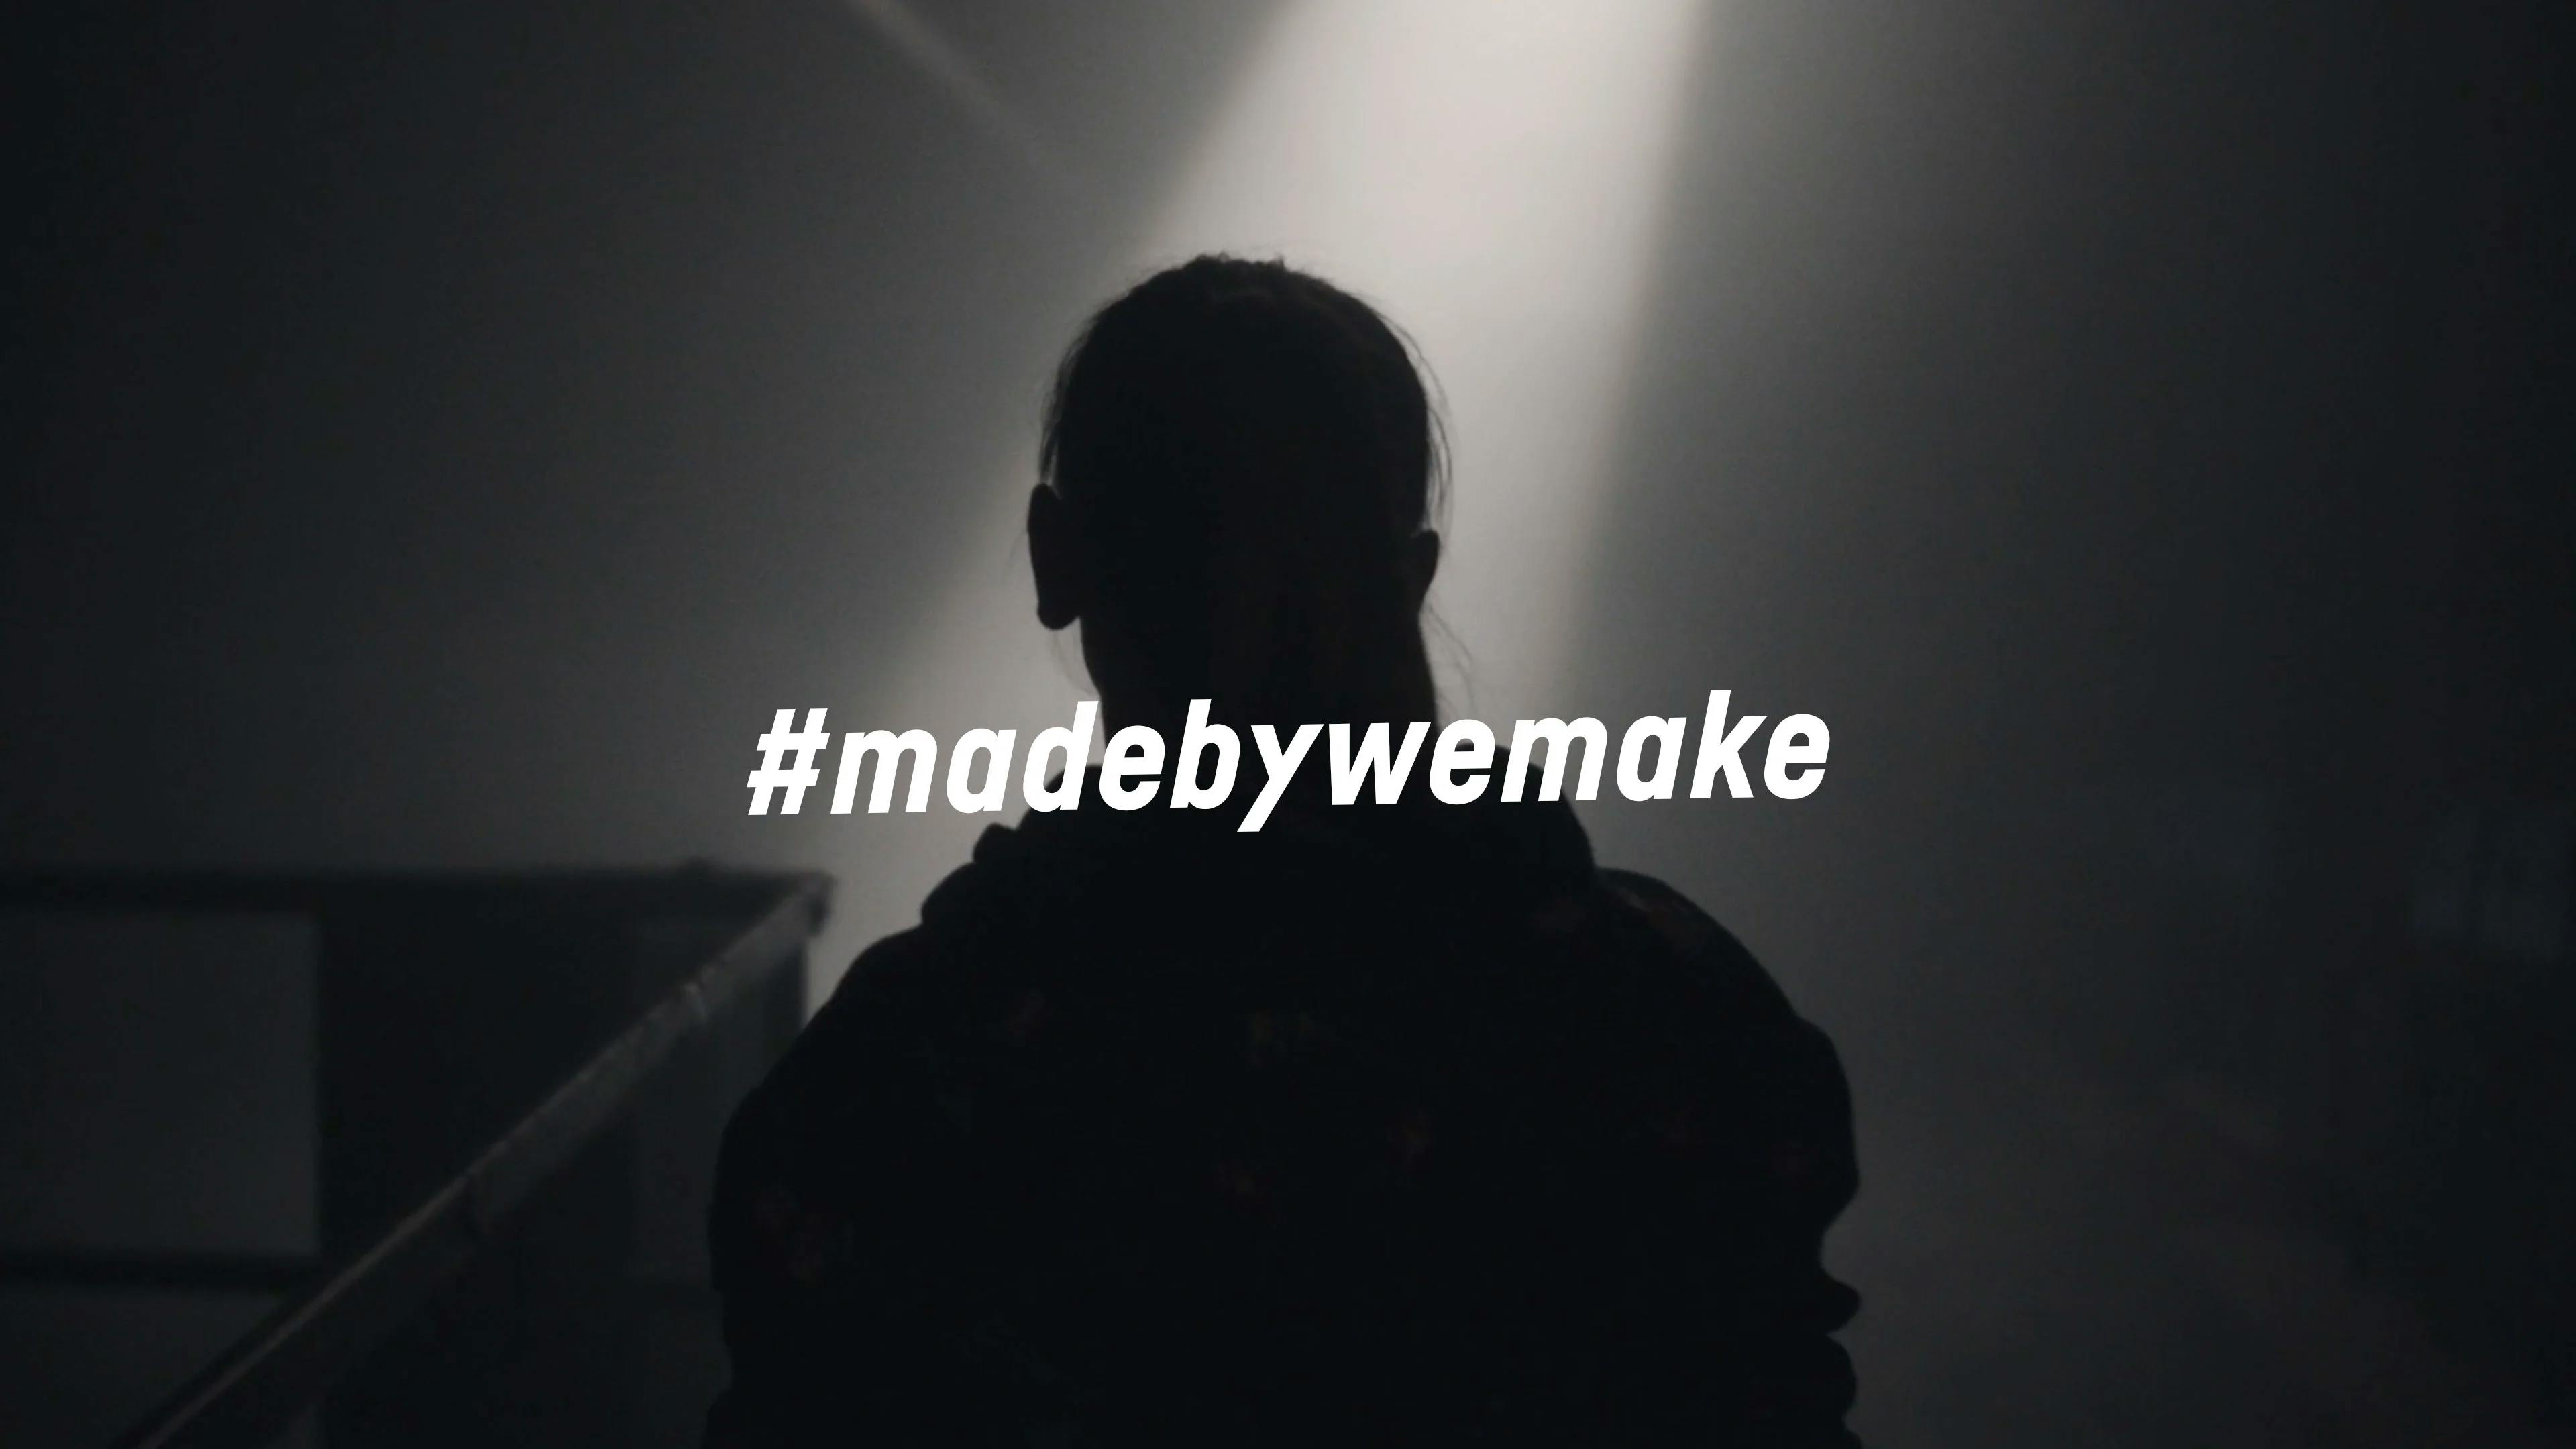 #madebywemake